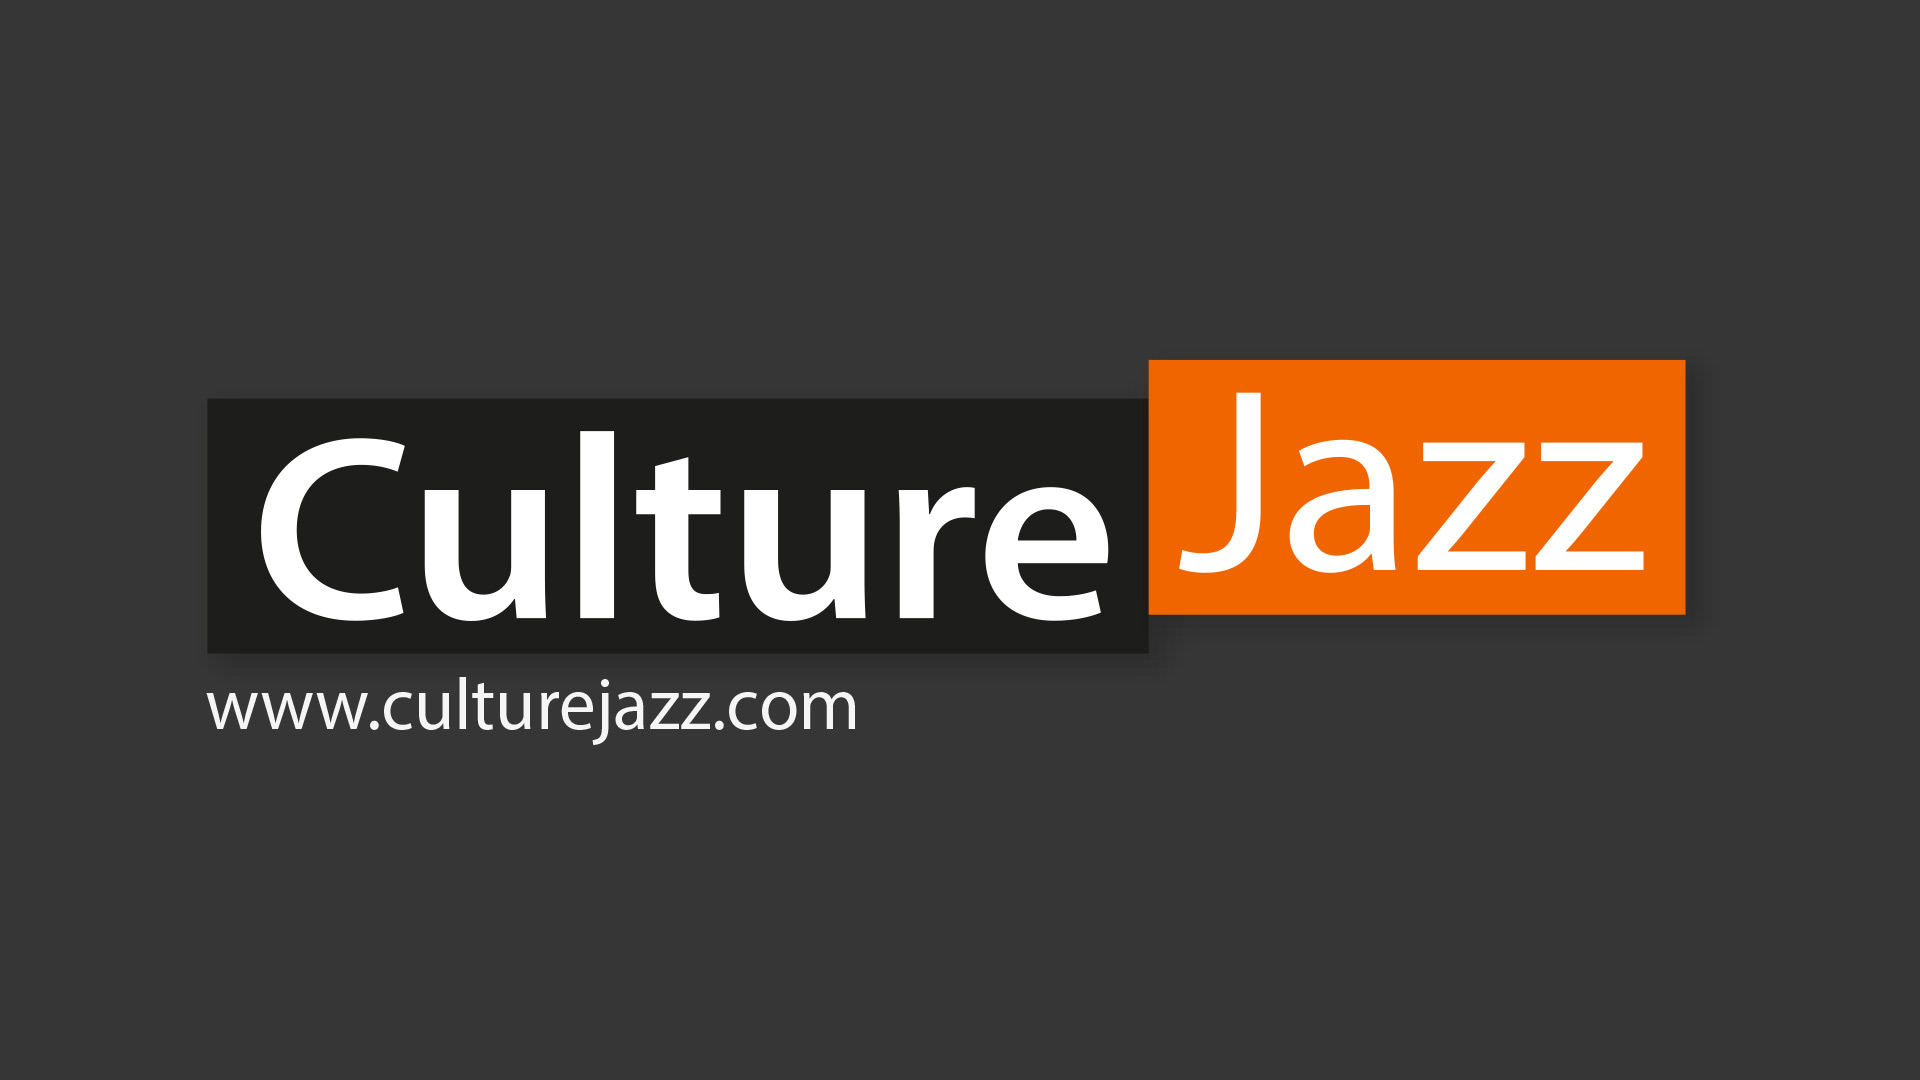 Culture Jazz - Logotype